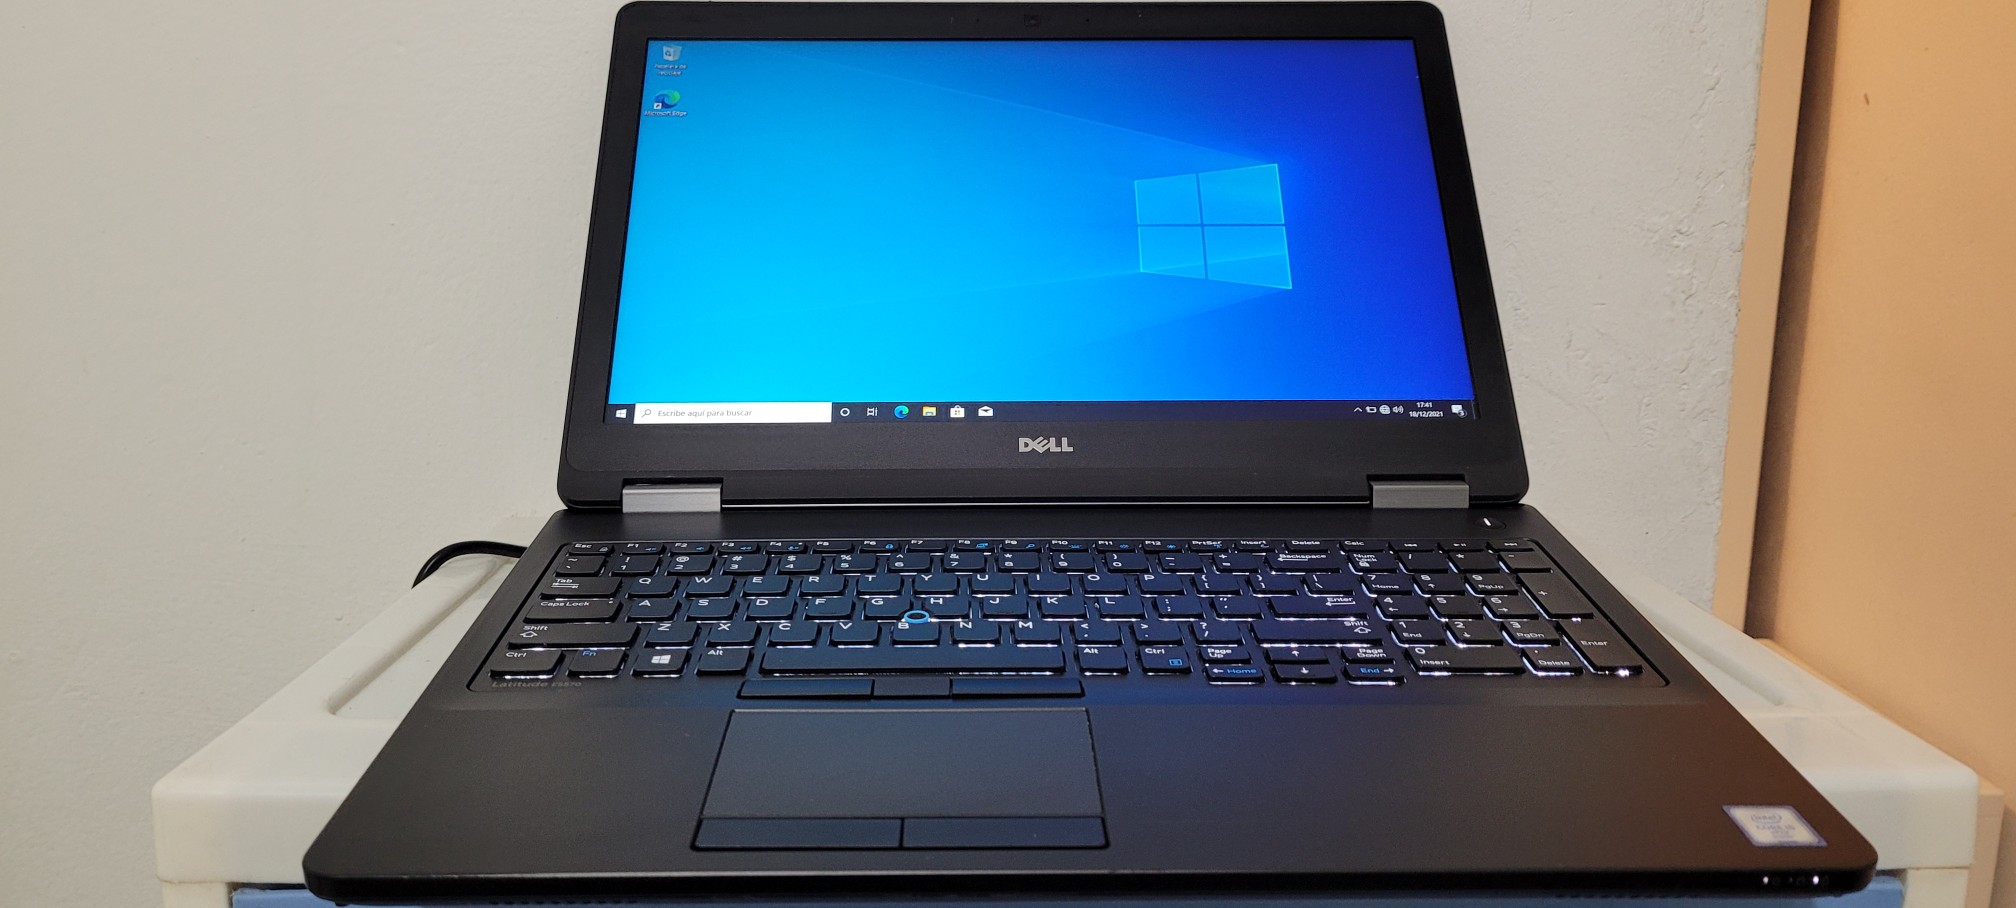 computadoras y laptops - Dell 5550 17 Pulg Core i7 Ram 8gb Disco 1TB Full hdmi